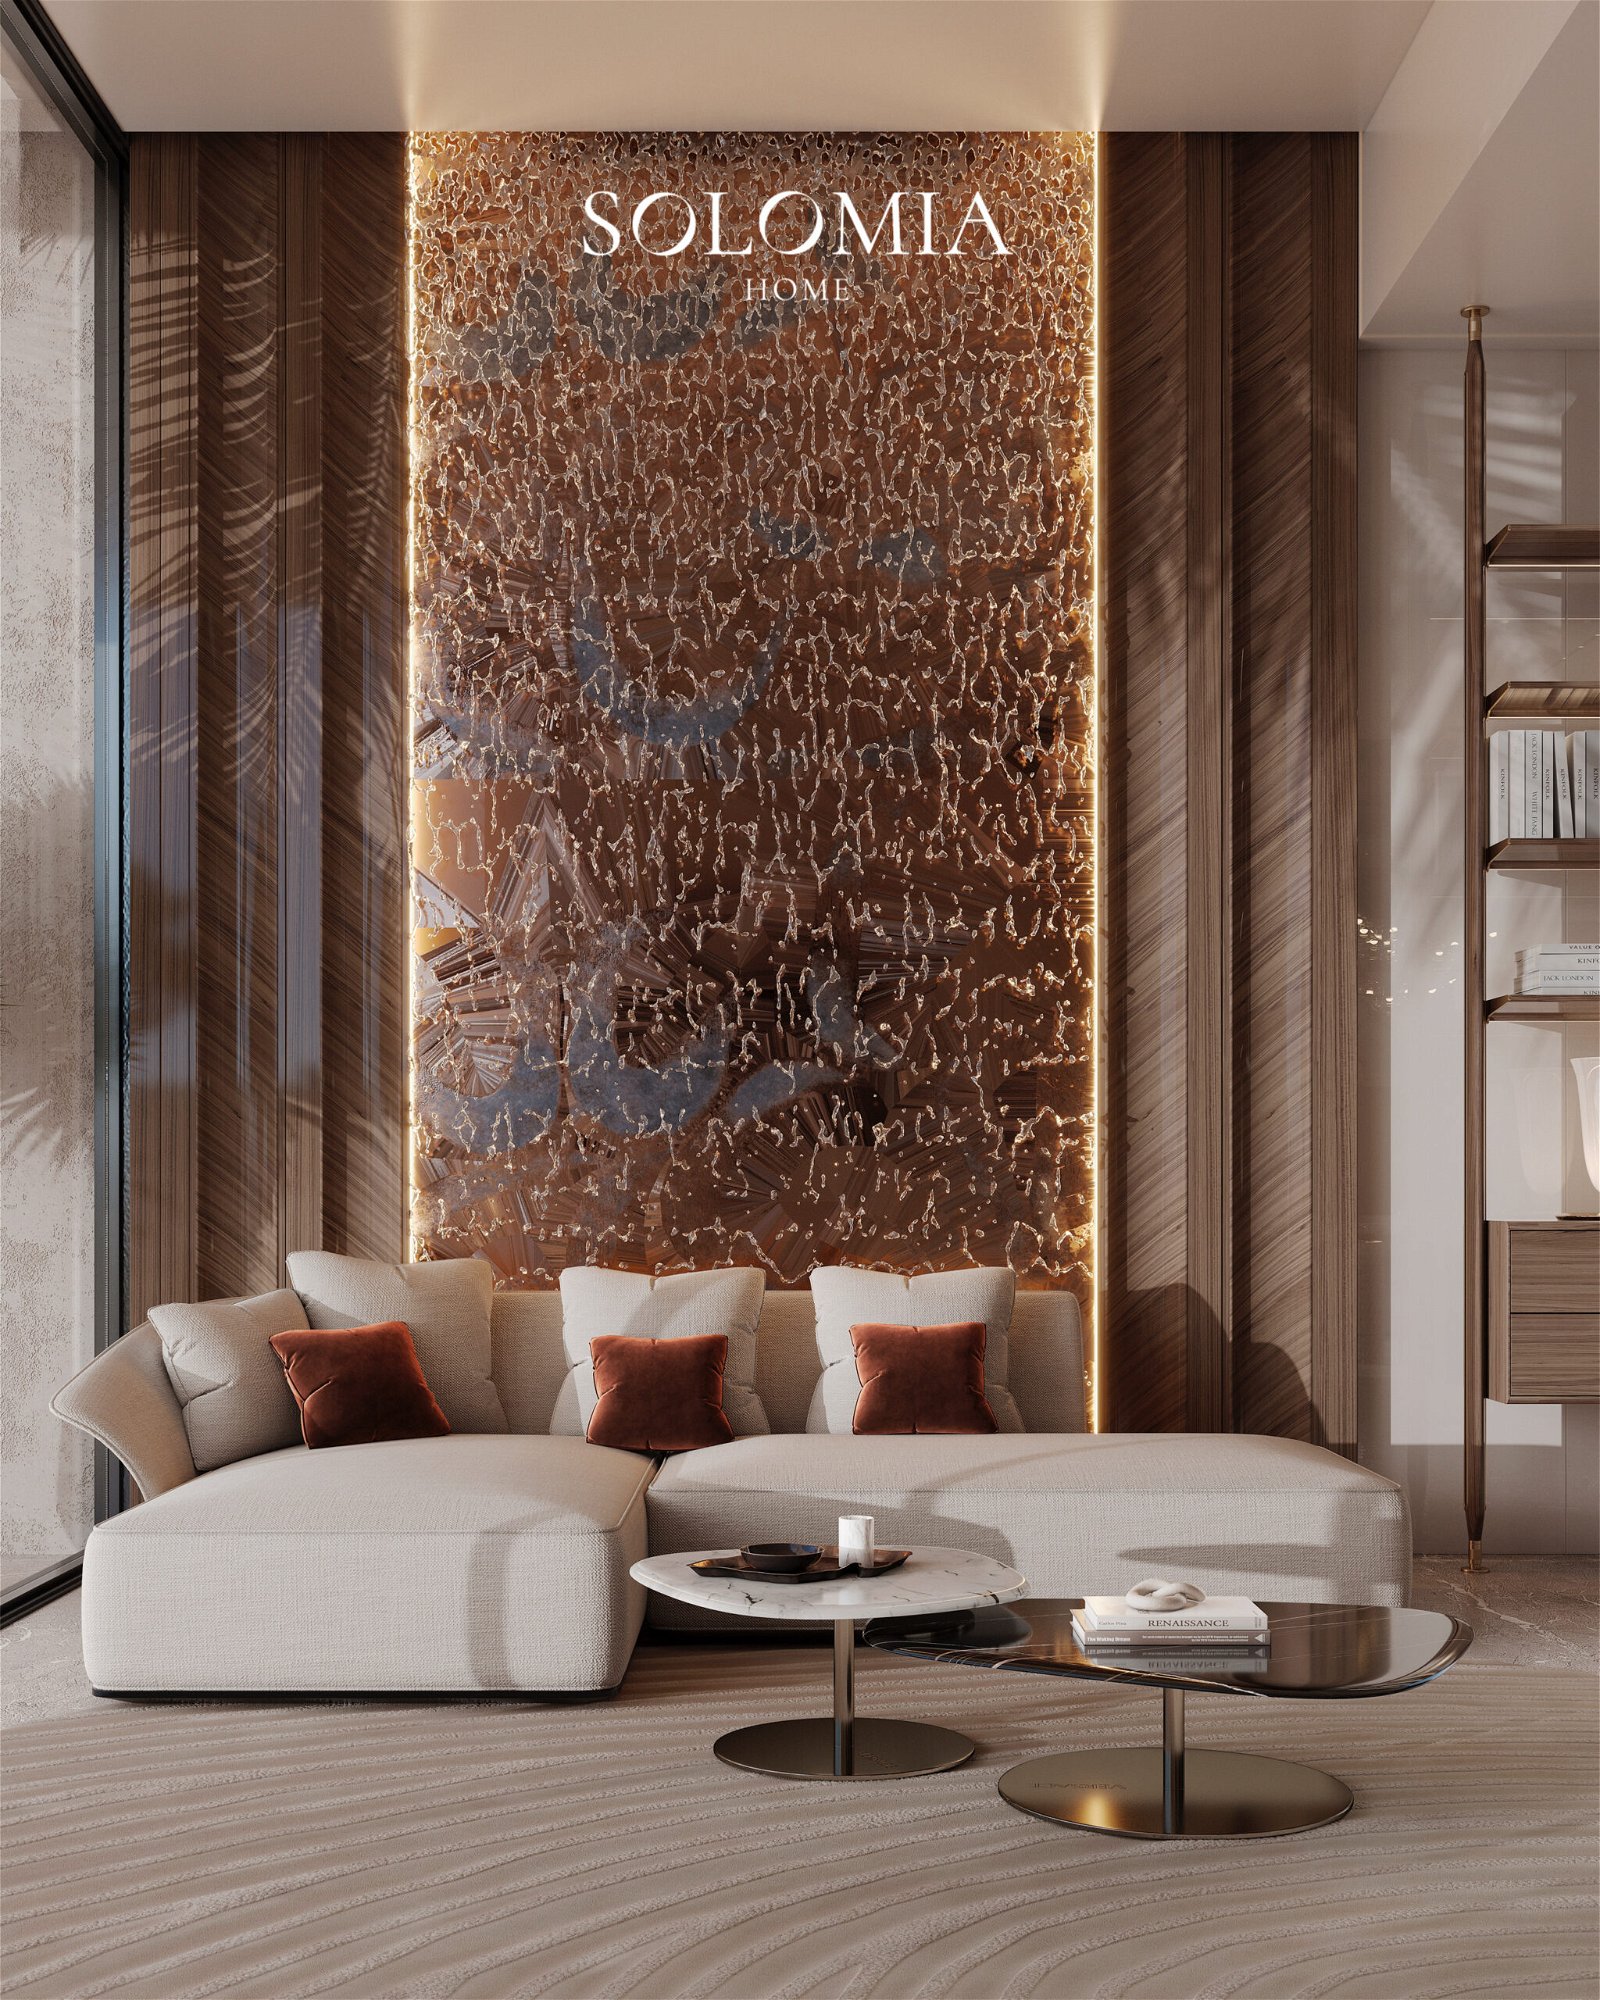 Villa Dubai Hills living room design